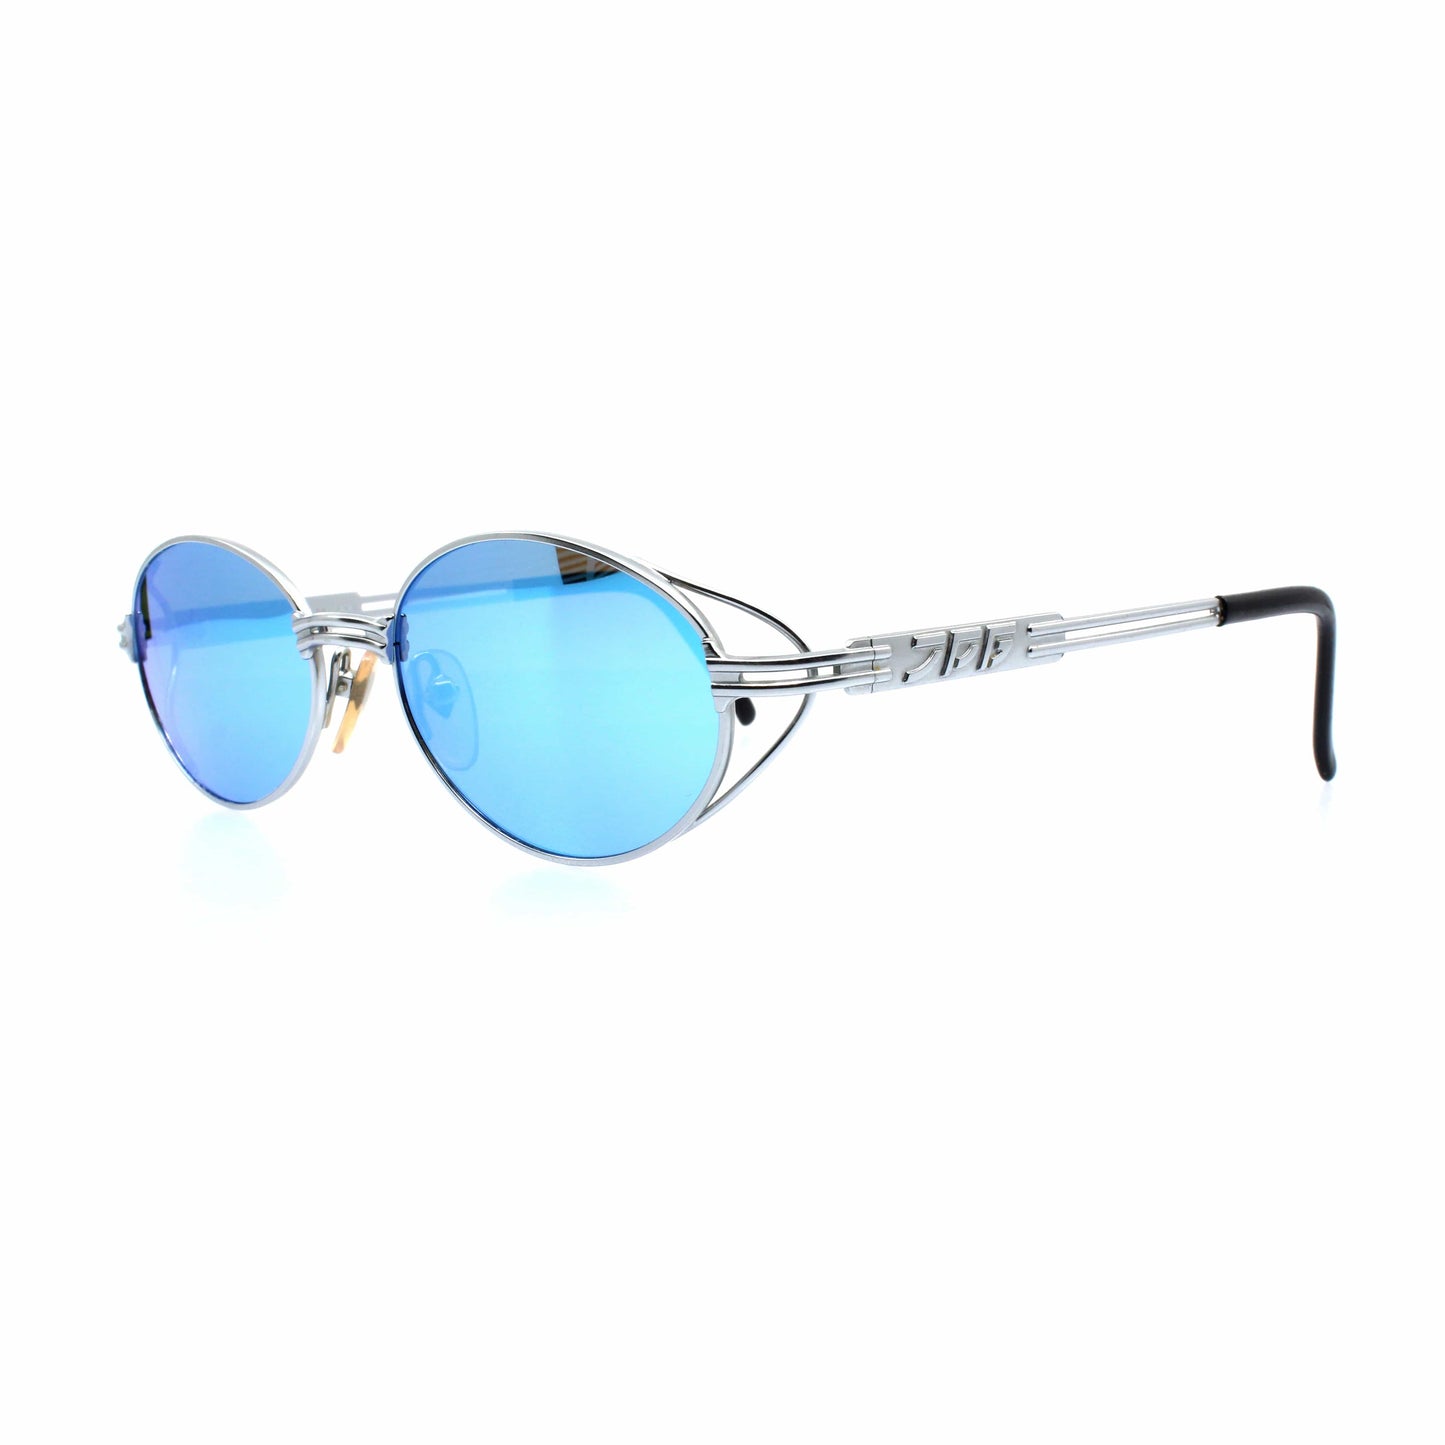 Silver Vintage Jean Paul Gaultier 58-6106 Sunglasses RSTKD Vintage